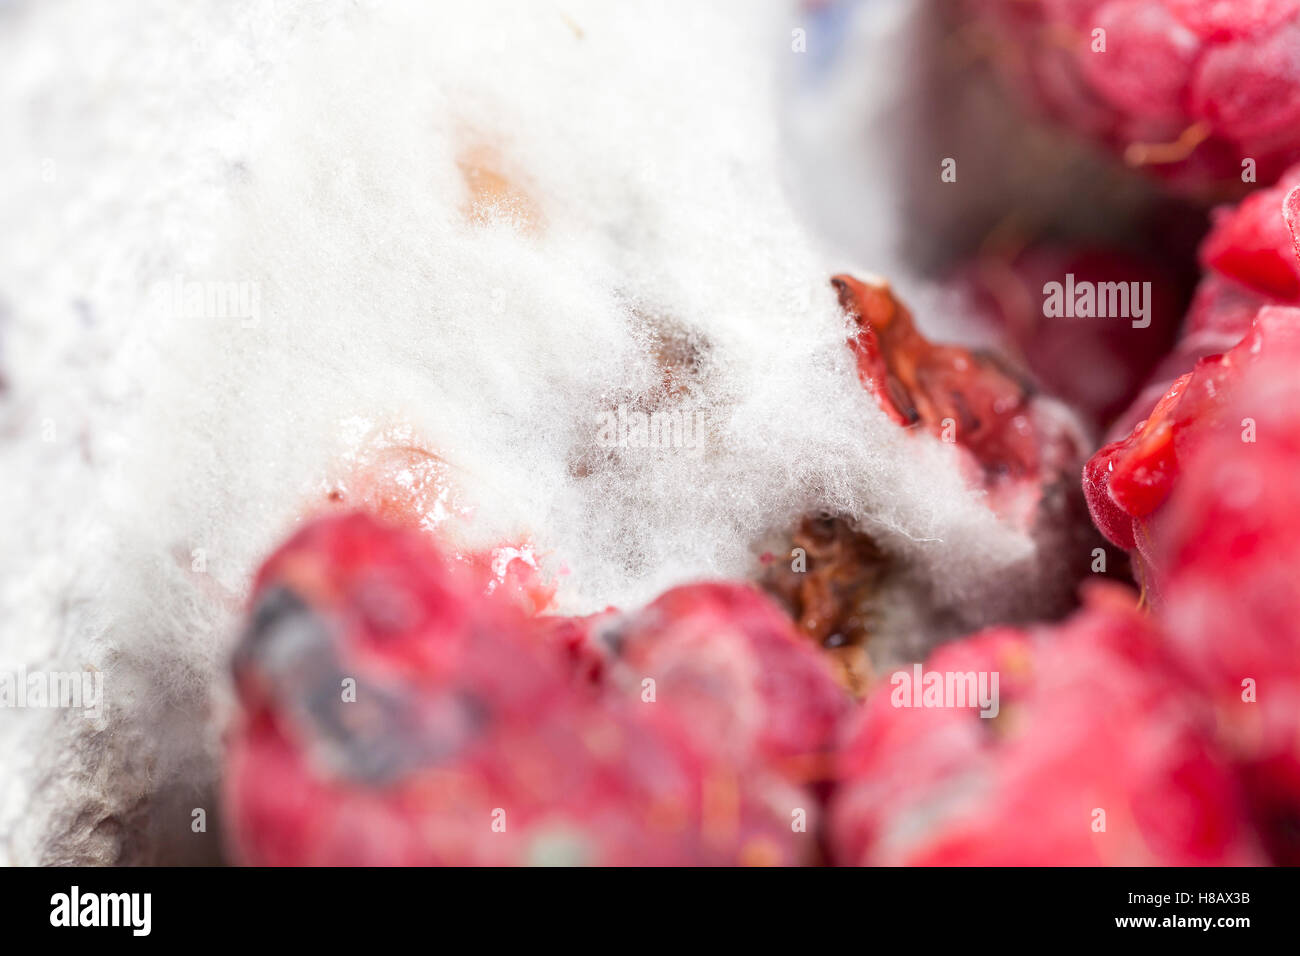 mold on the raspberries Stock Photo